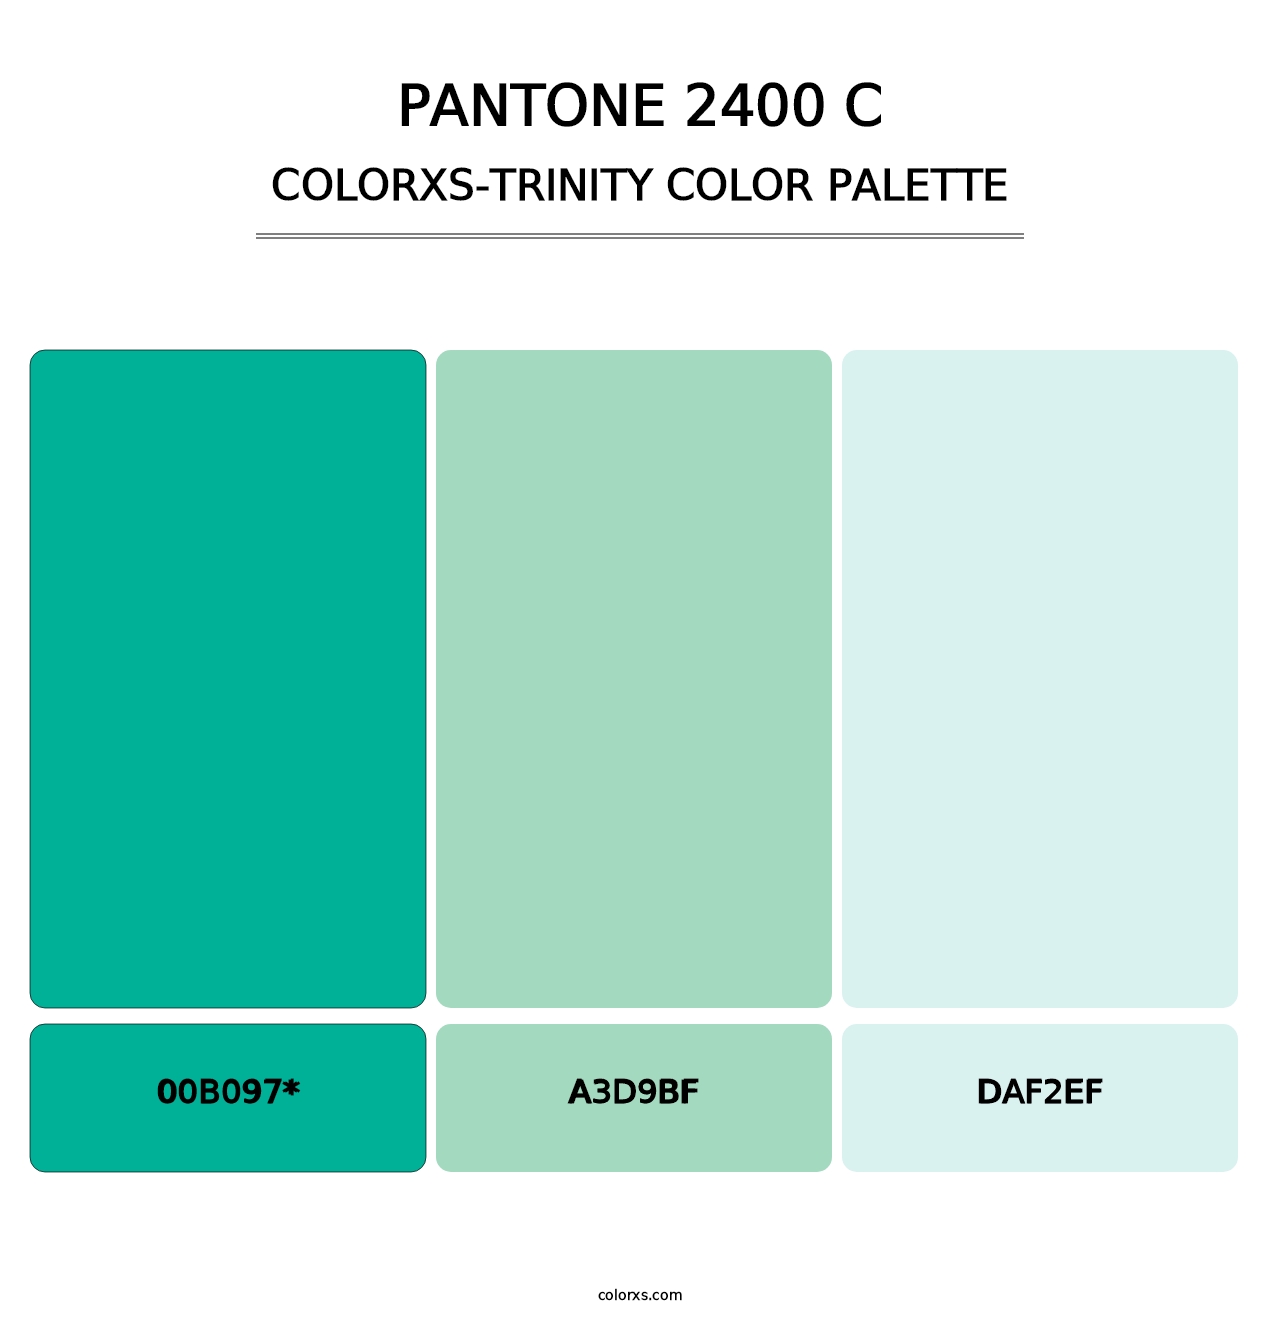 PANTONE 2400 C - Colorxs Trinity Palette